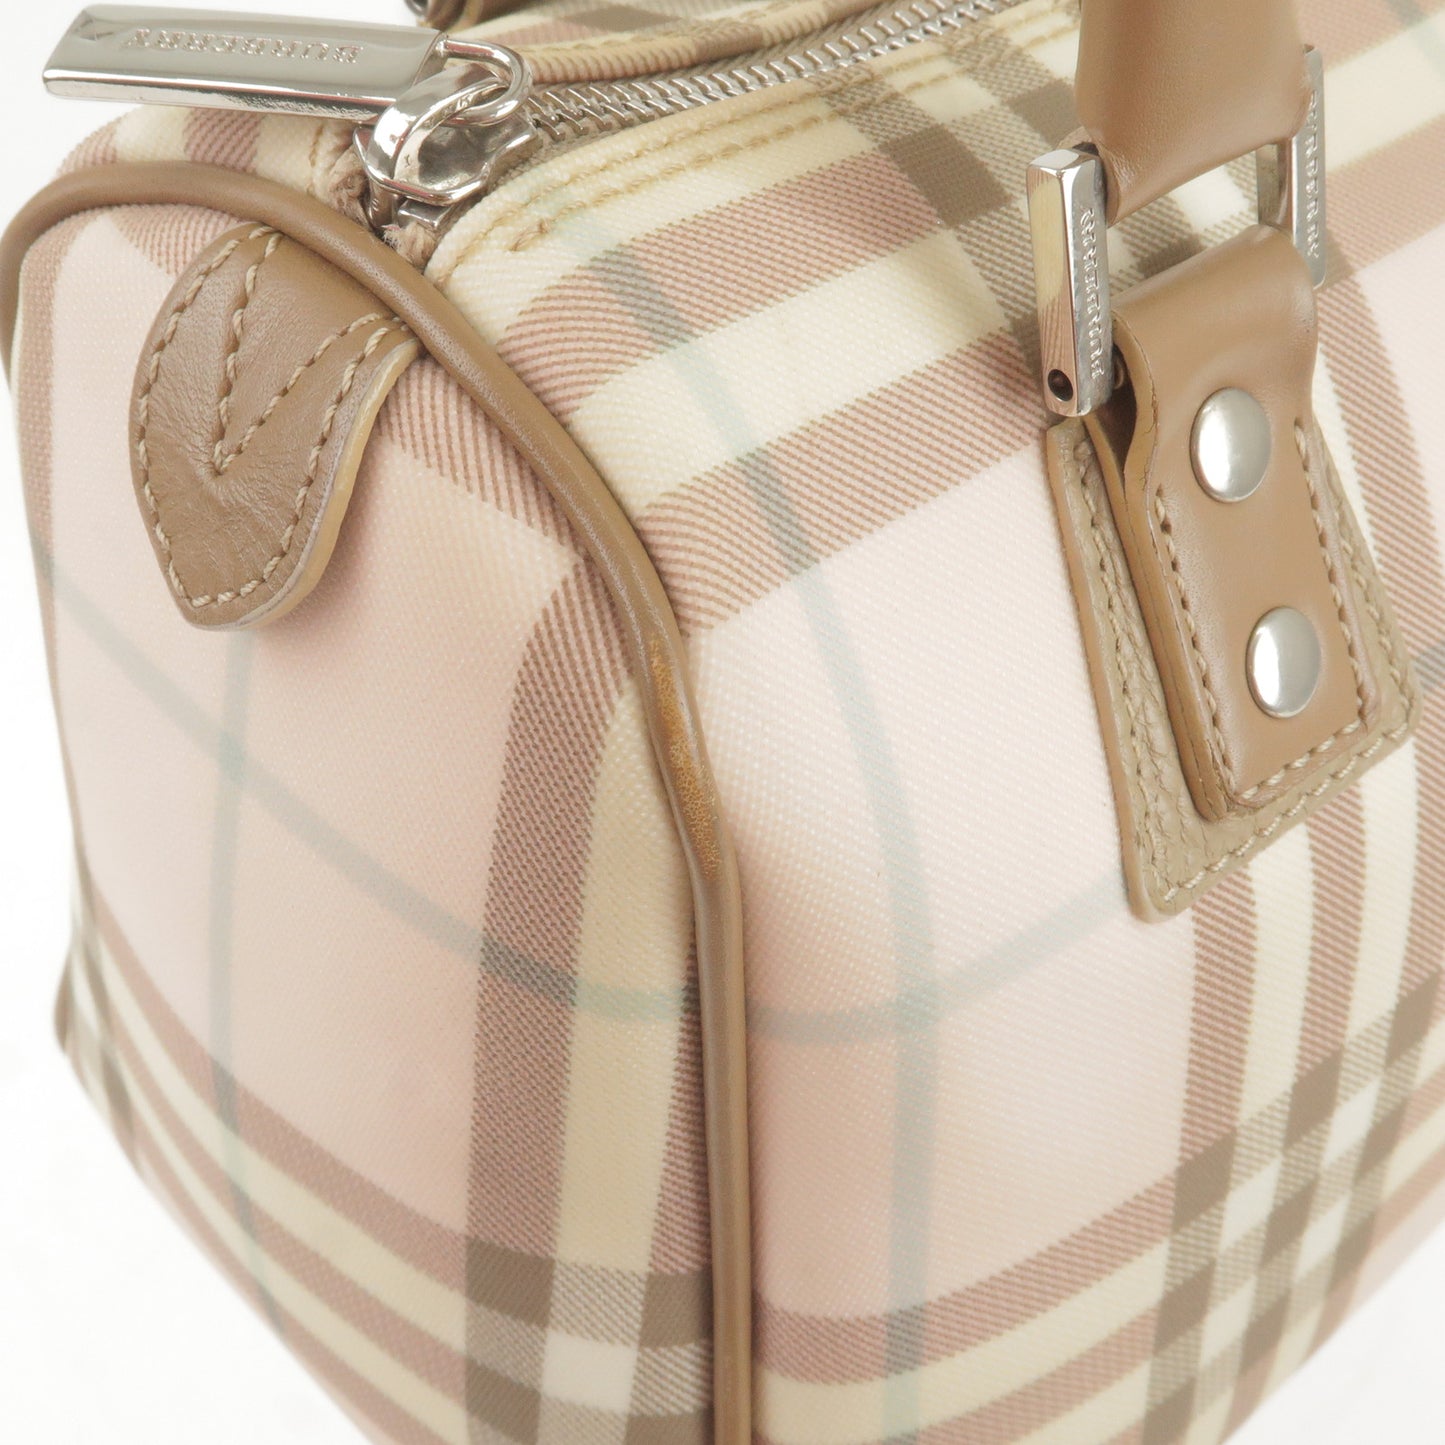 Canvas - Pink - olympia small shoulder bag burberry bag heather melange -  Nova - Plaid - Bag - Hand - Beige – Burberry Eyewear check detail round  sunglasses - BURBERRY - Leather